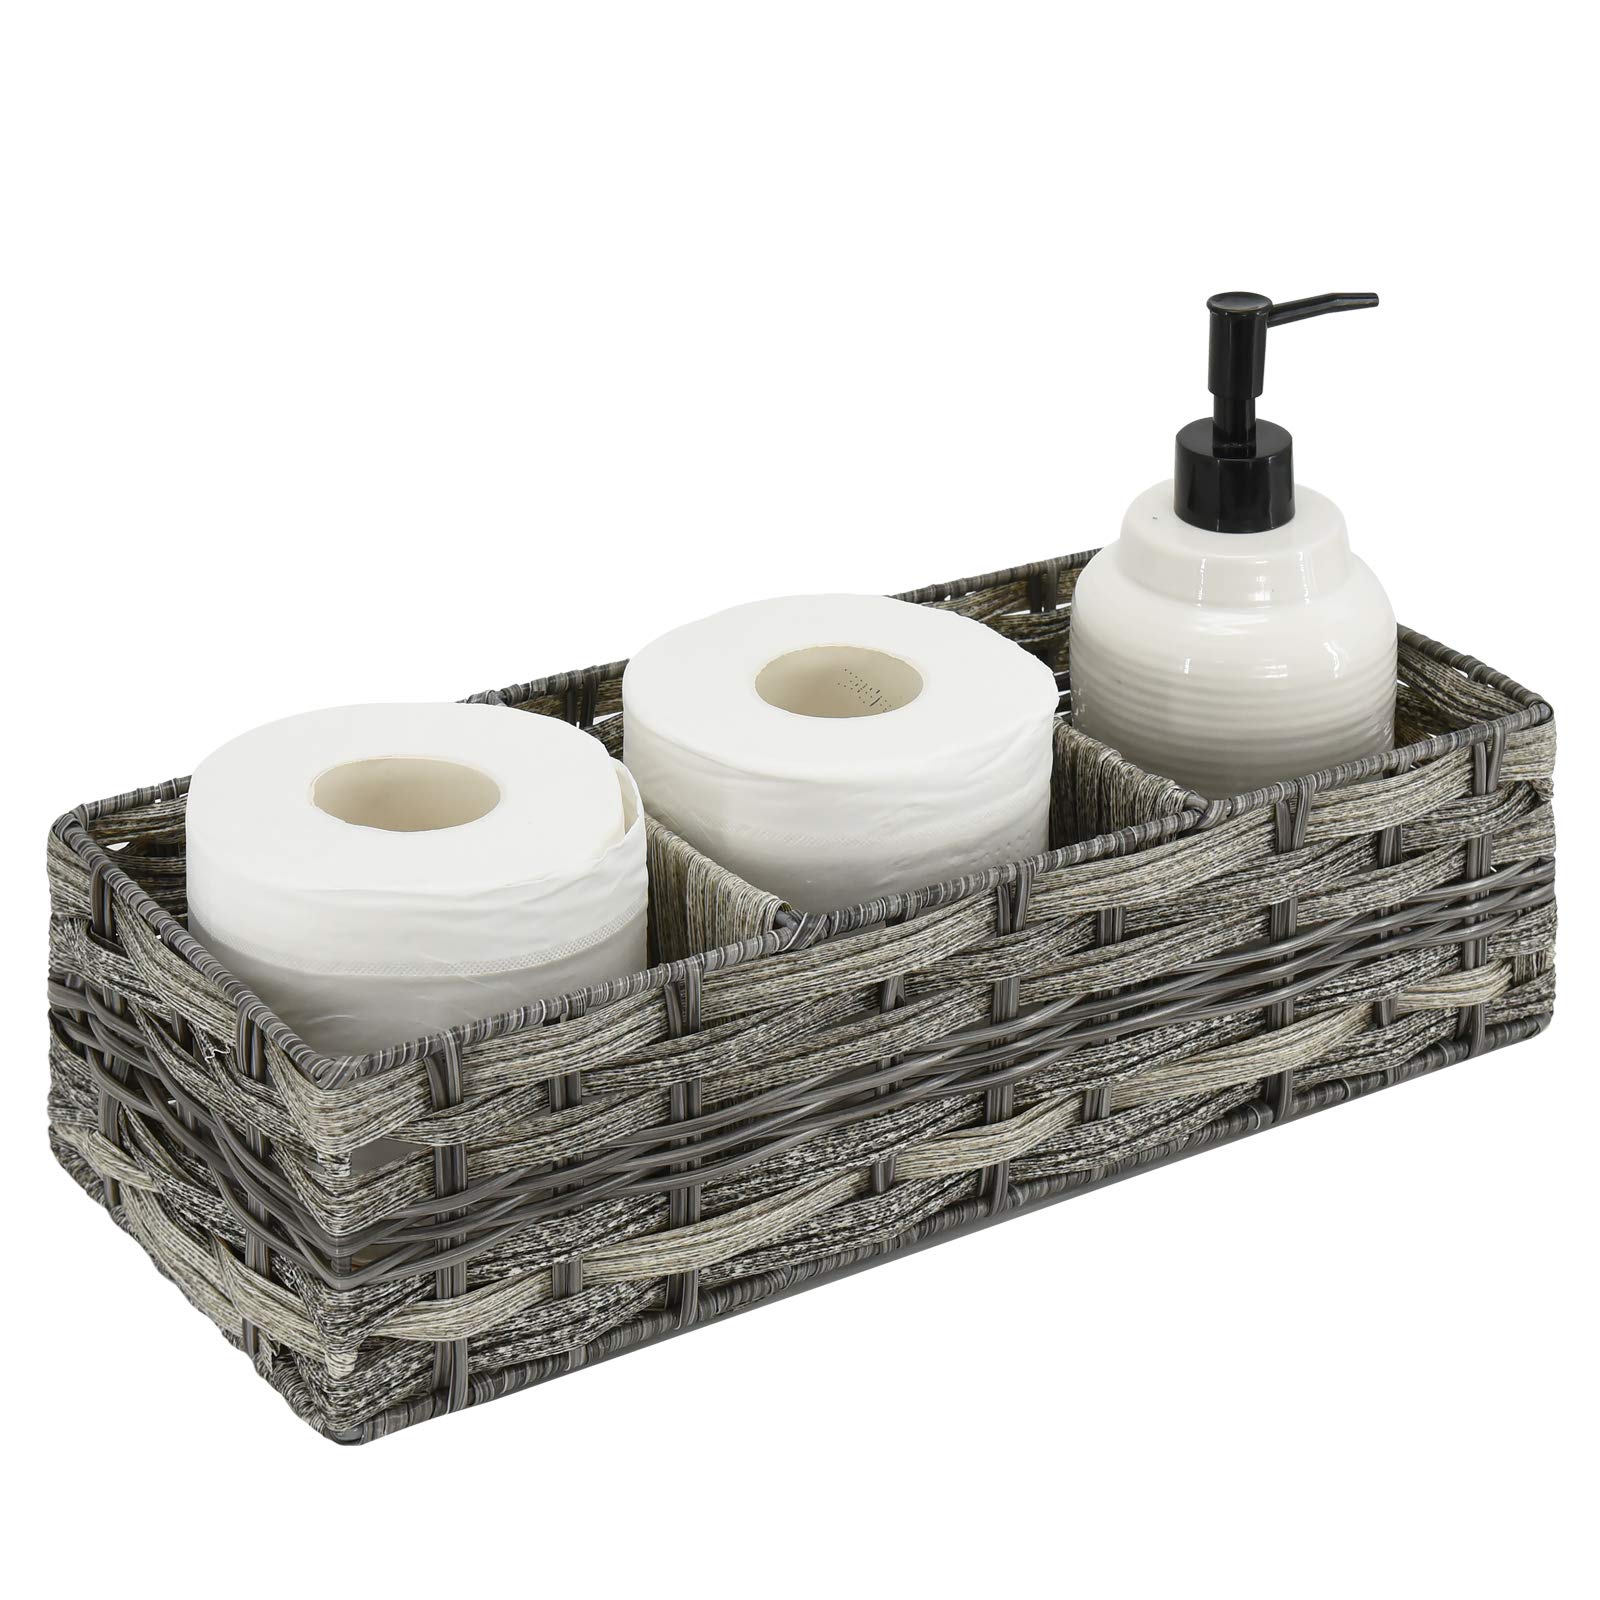 Gray bathroom storage basket. Wicker organizer with dividers